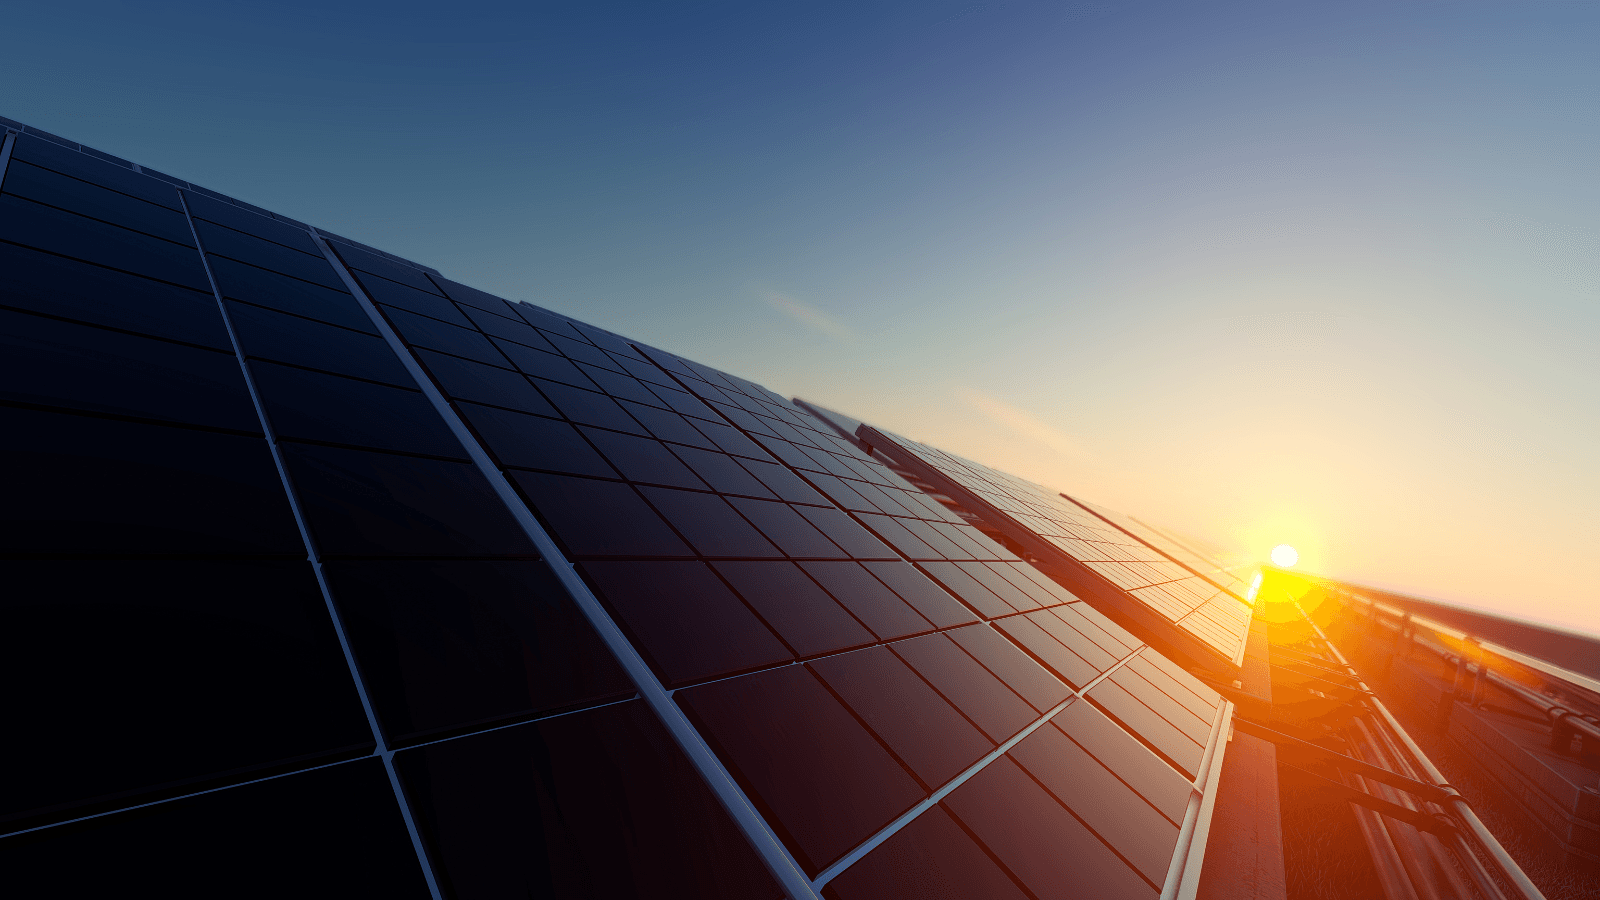 Solar panels at sunset